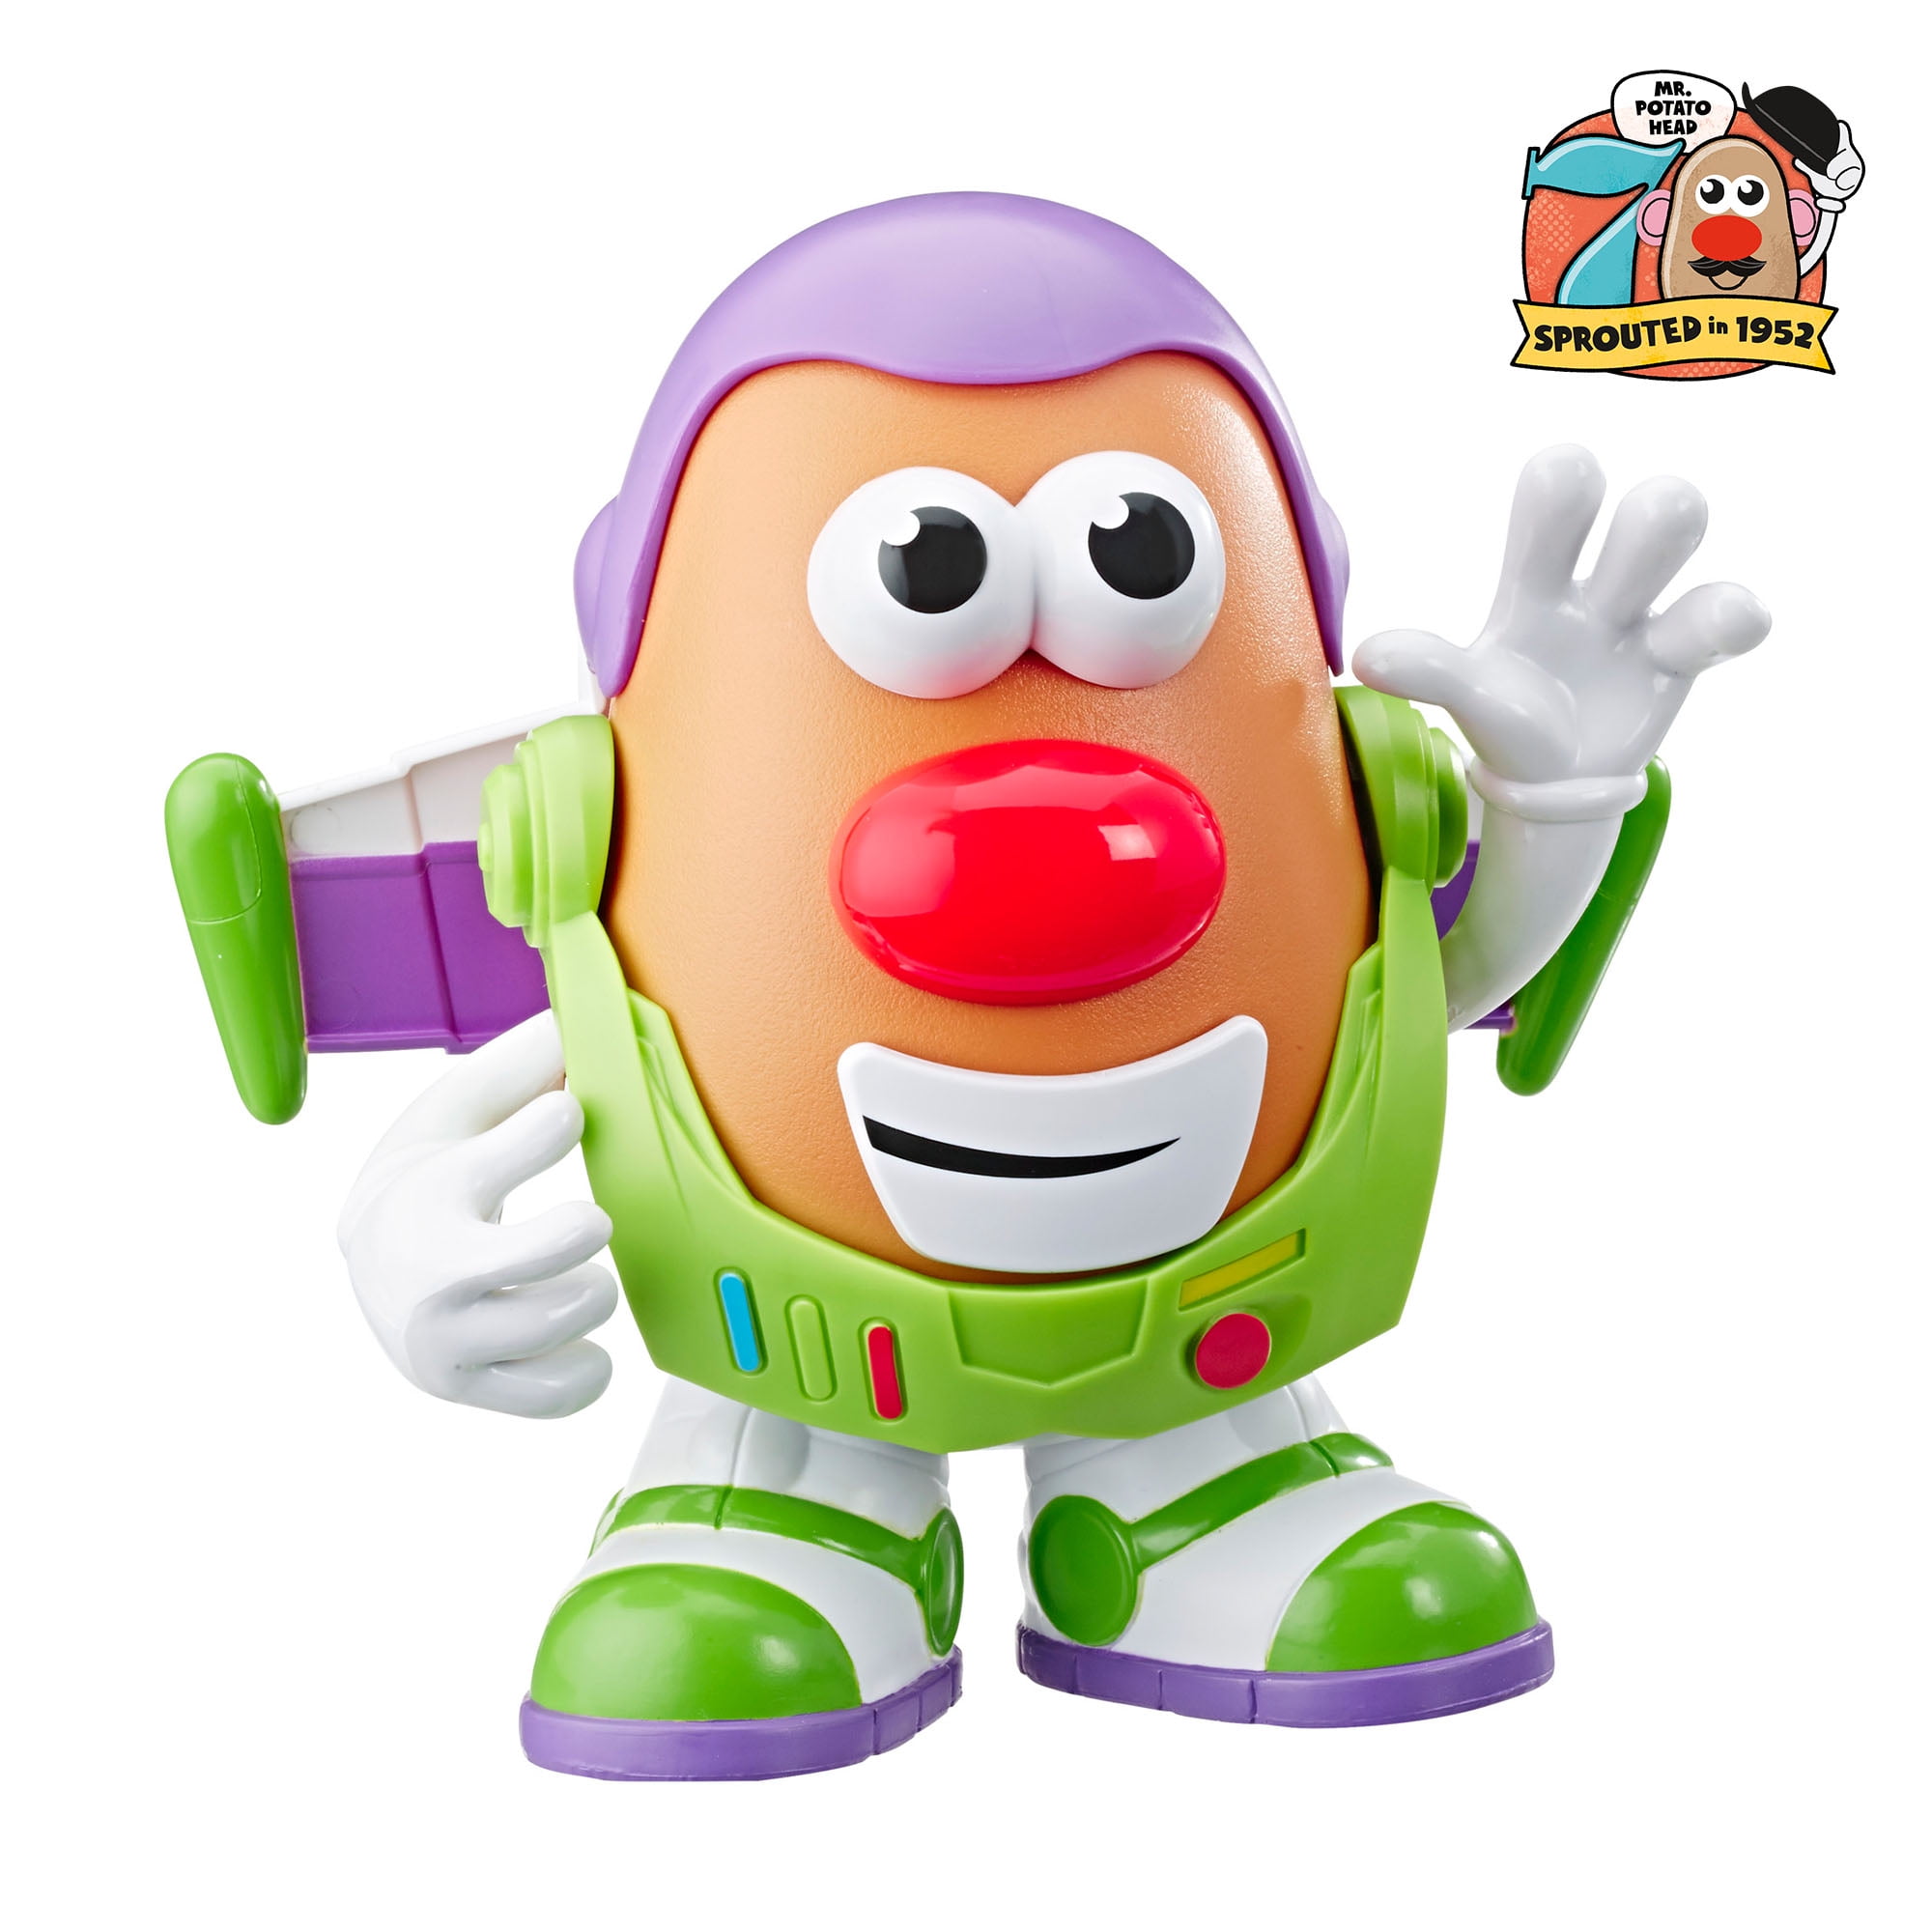 Playskool Disney Pixar Toy Story 4 Mrs Potato Head Classic Figure for sale online 